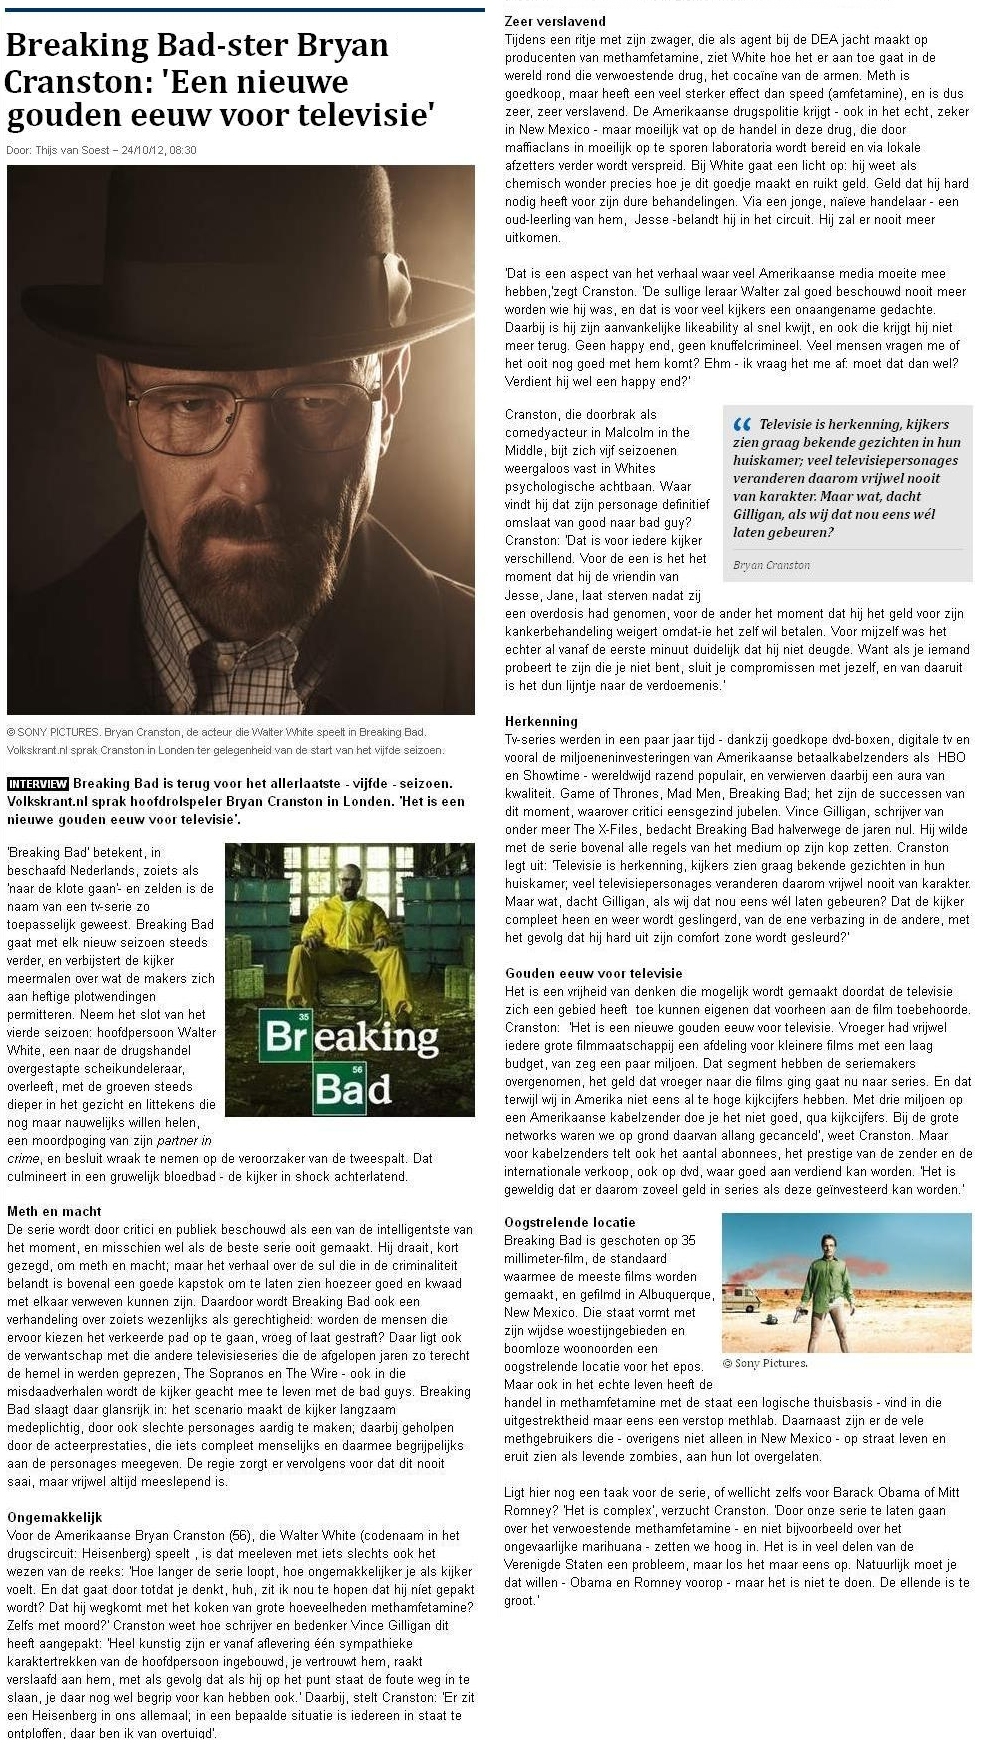 Bryan Cranston interview, Dutch Volkskrant newspaper, October 24, 2012